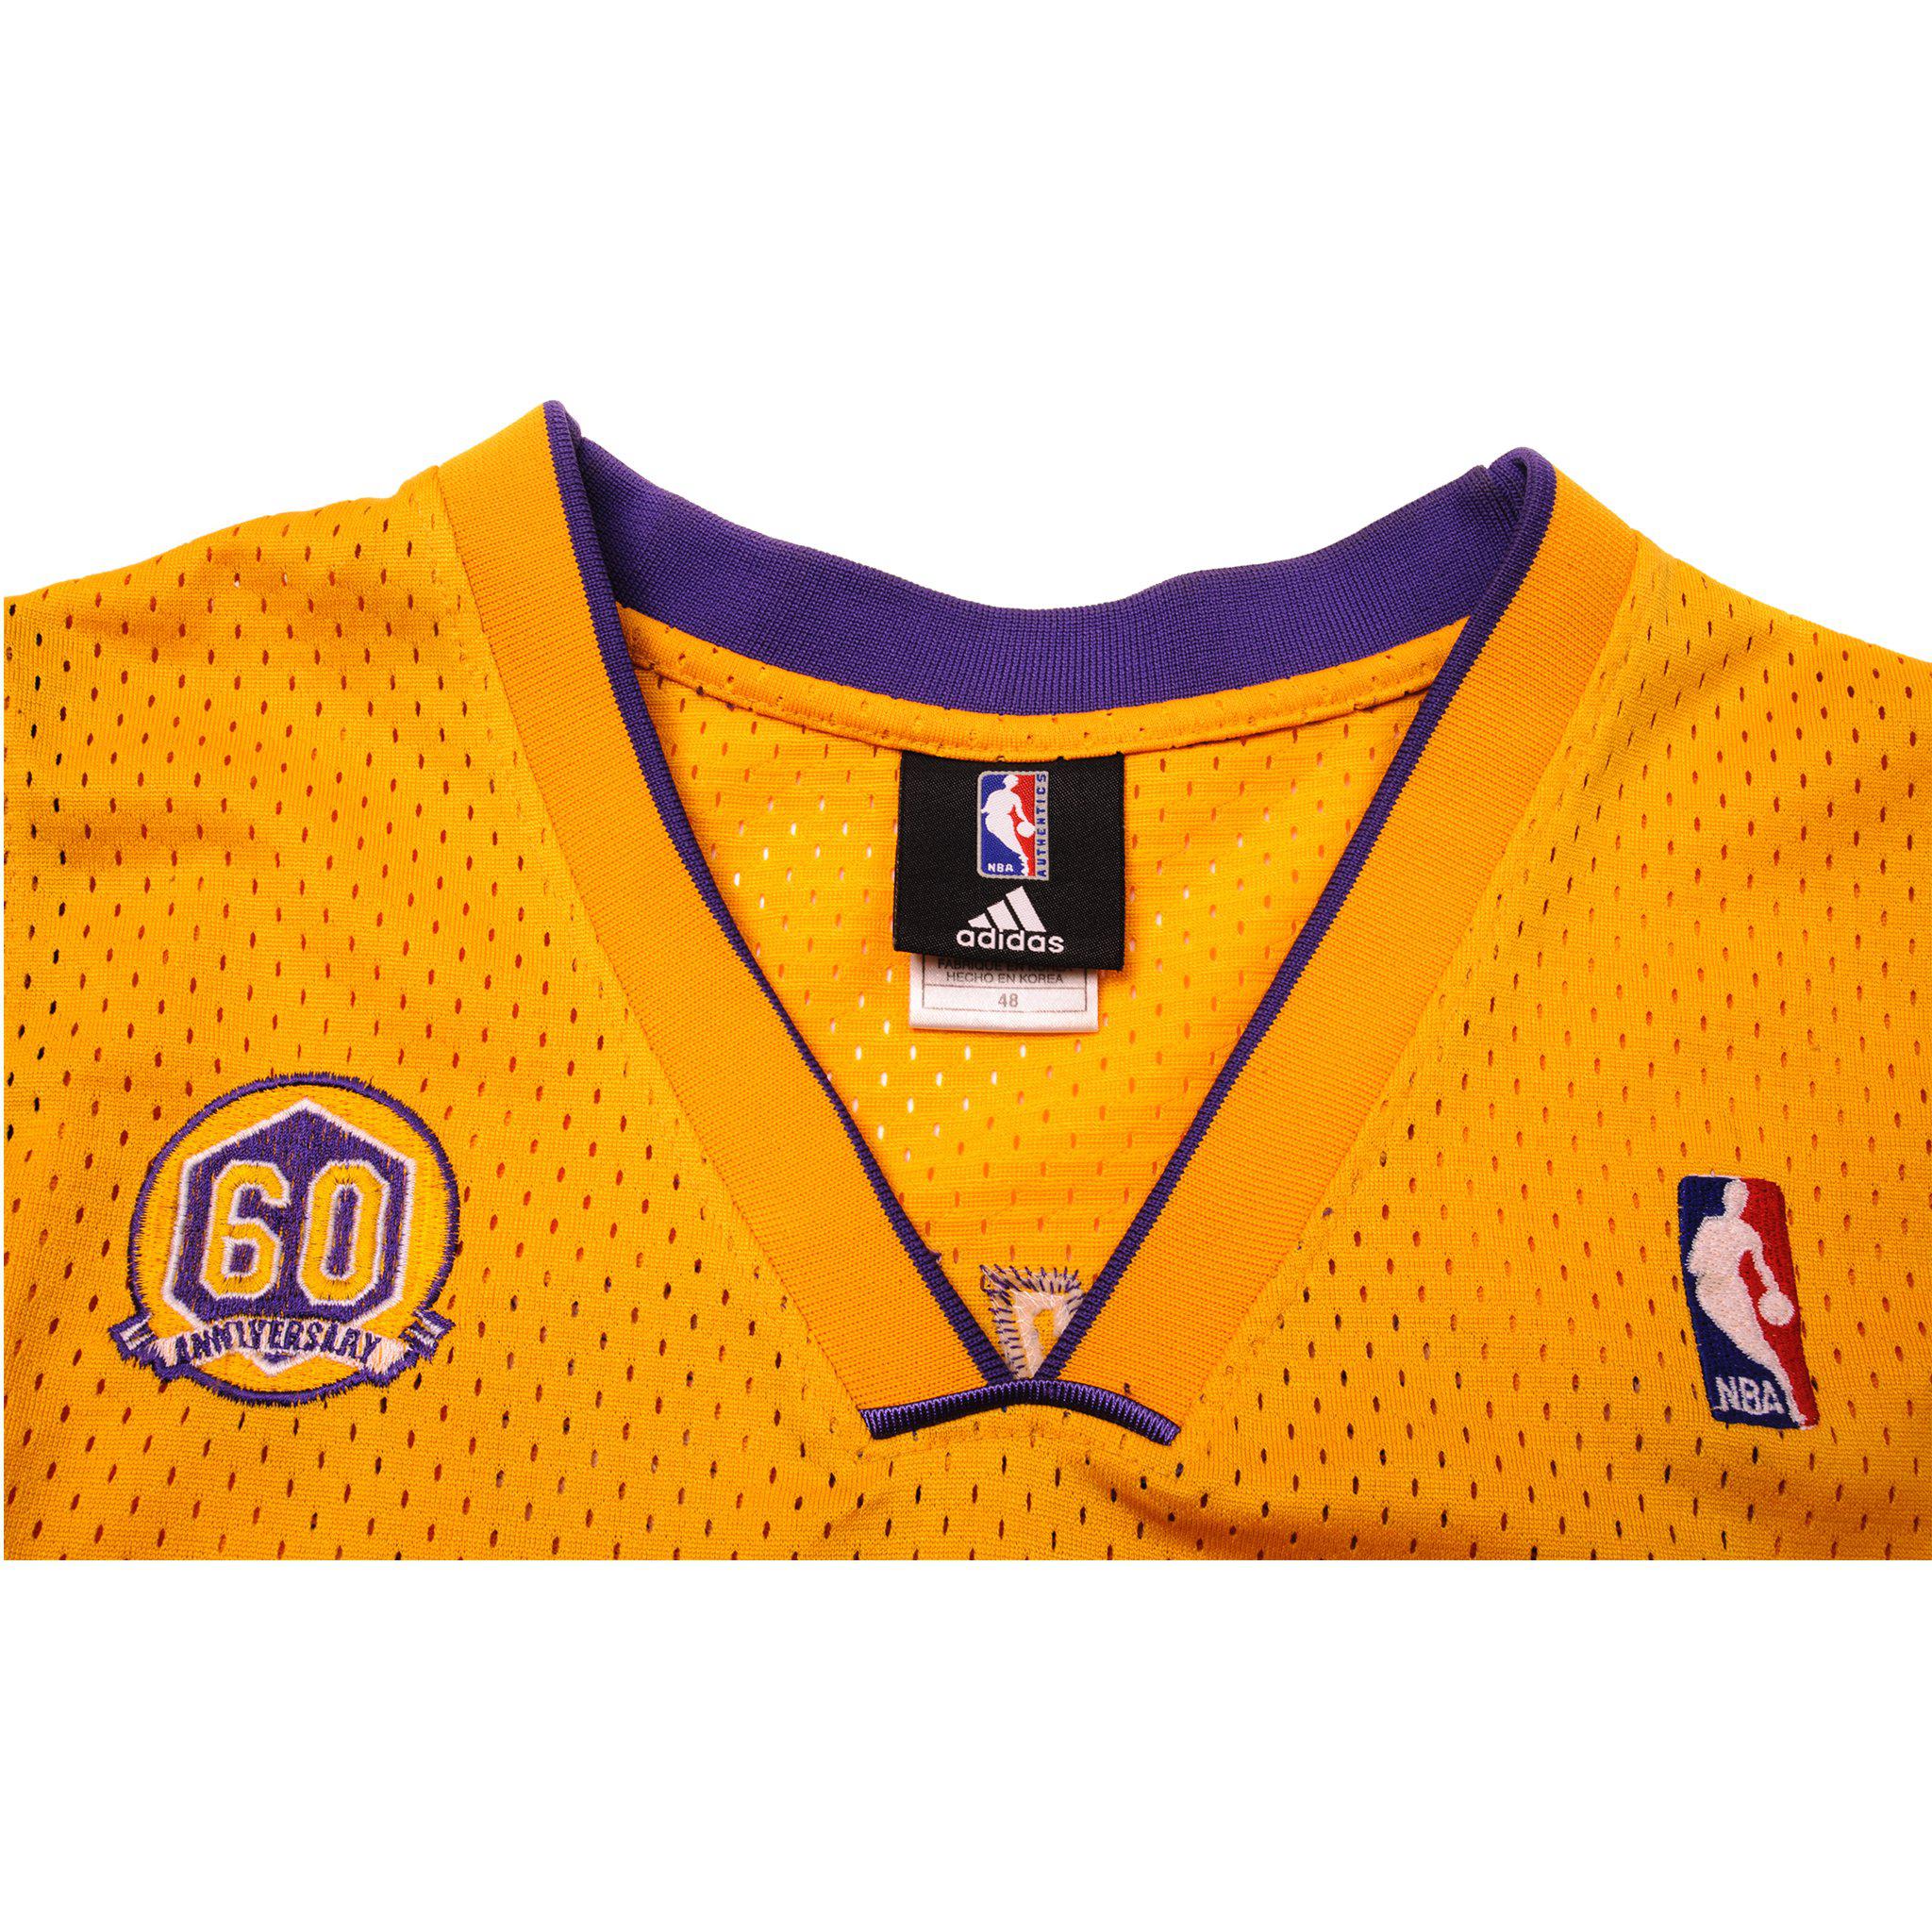 KOBE BRYANT Adidas NBA Los Angeles Lakers 60th Anniversary #24 Jersey Sz 50  XL